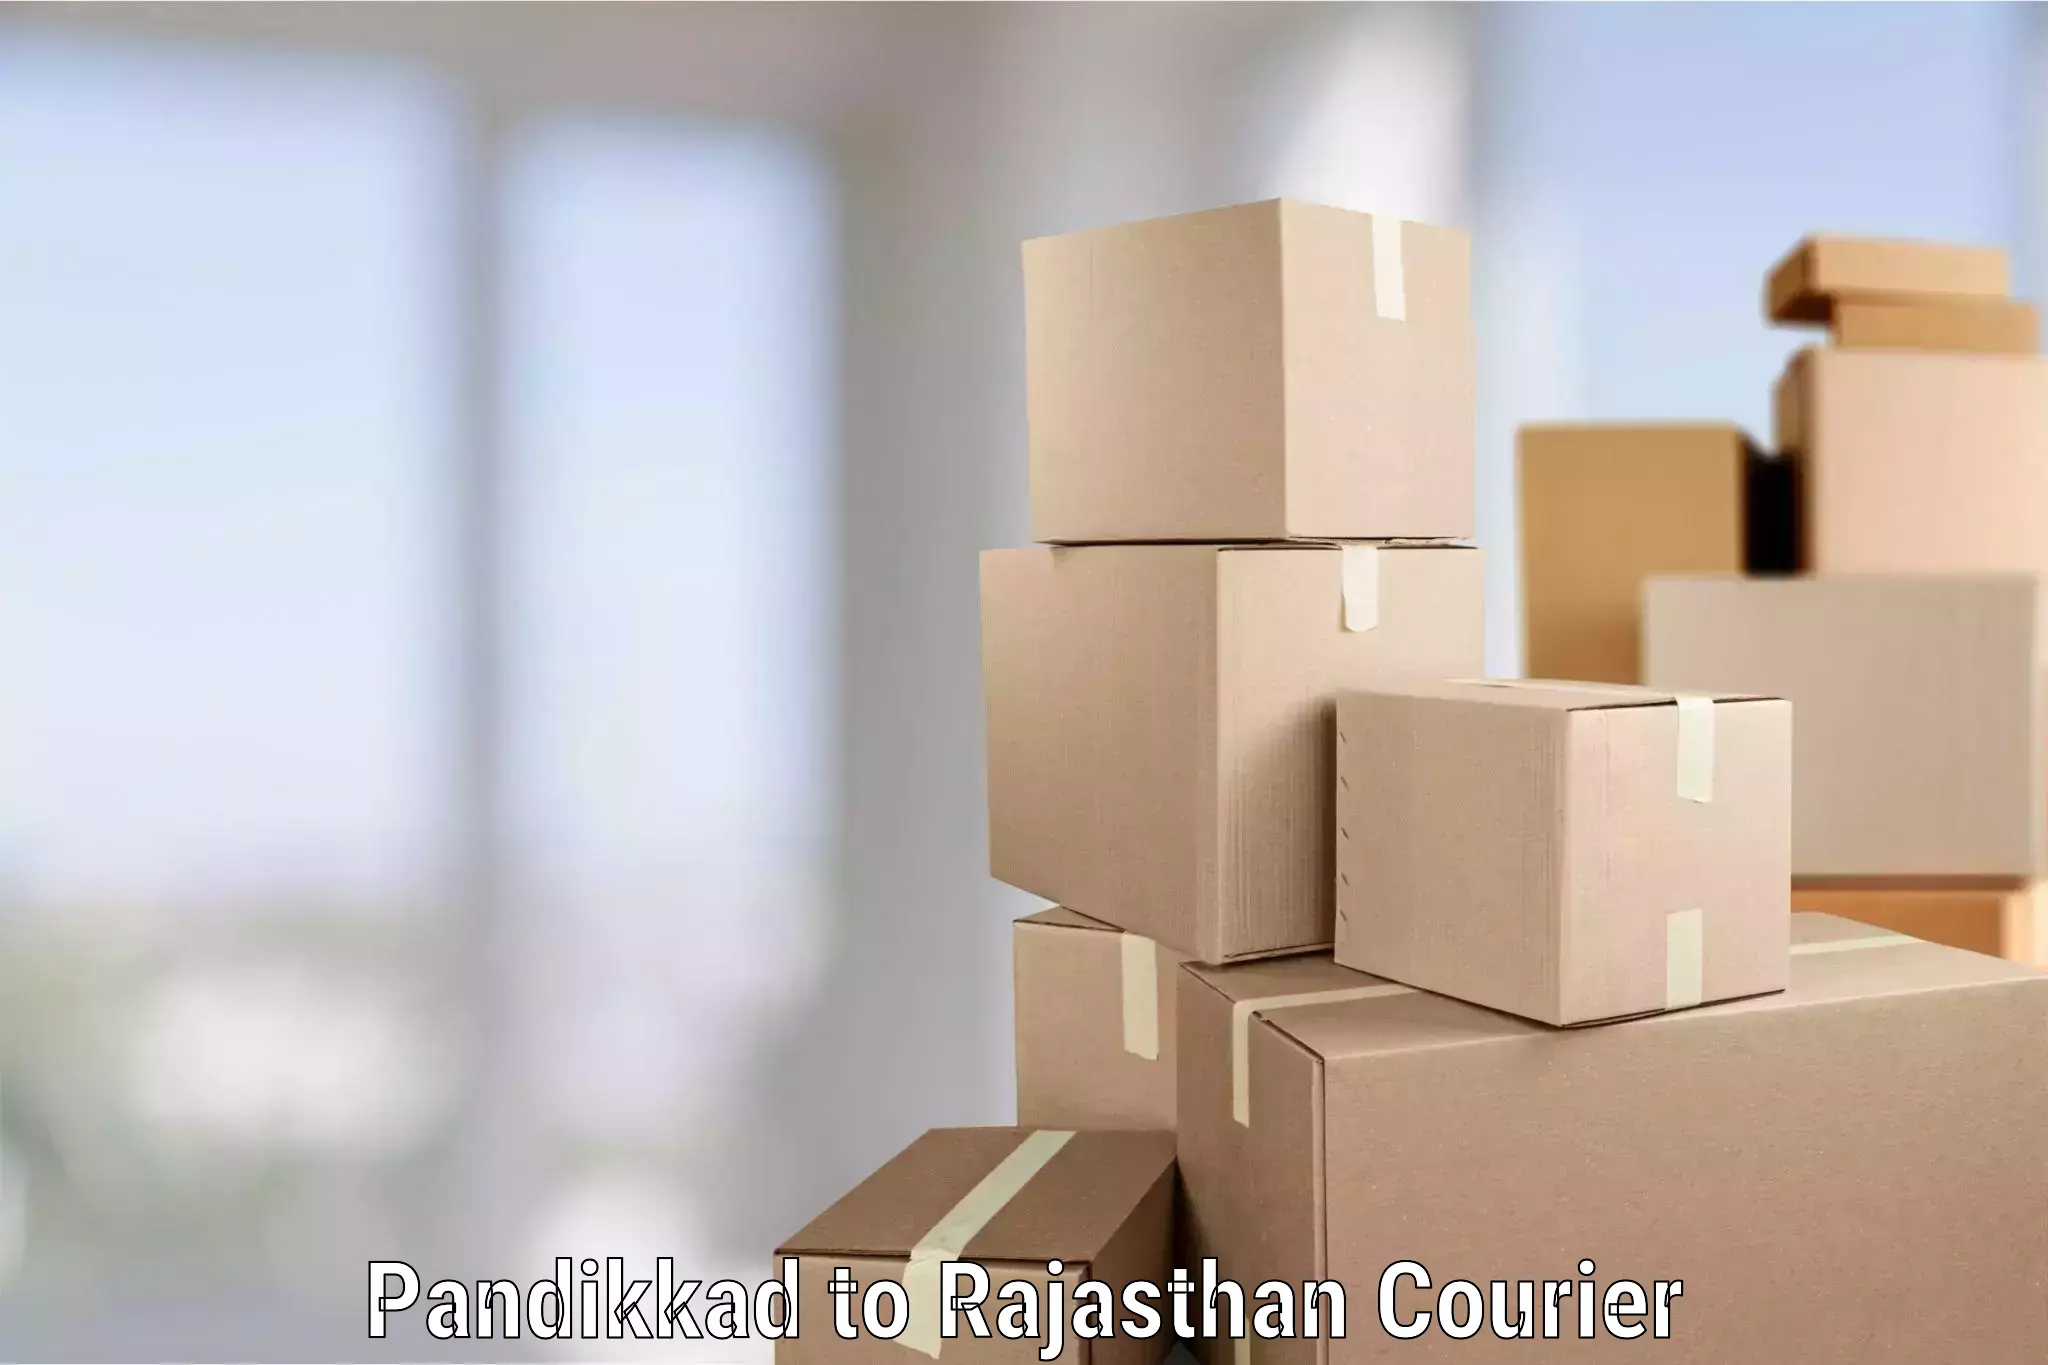 Furniture transport specialists Pandikkad to Rajasthan